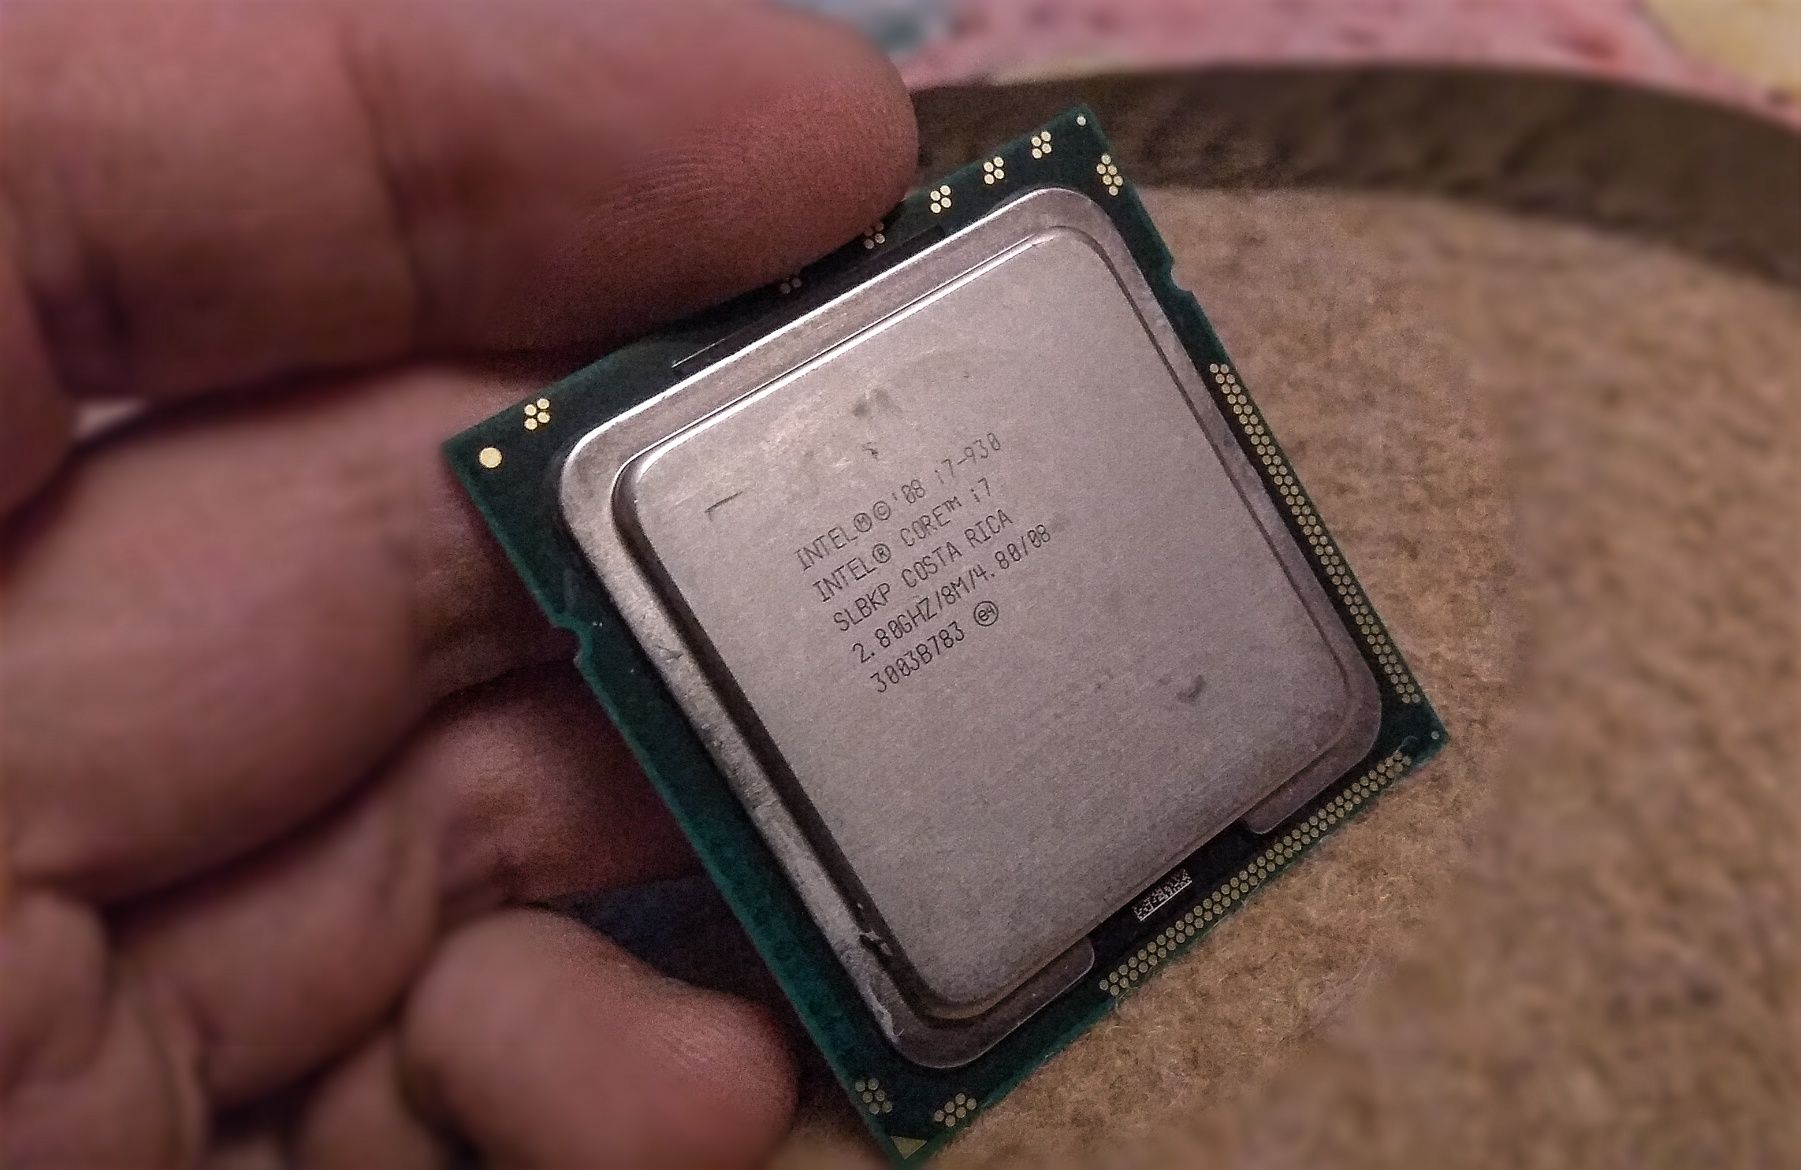 Procesor intel i7, Xeon,AMD Athlon64 !!!